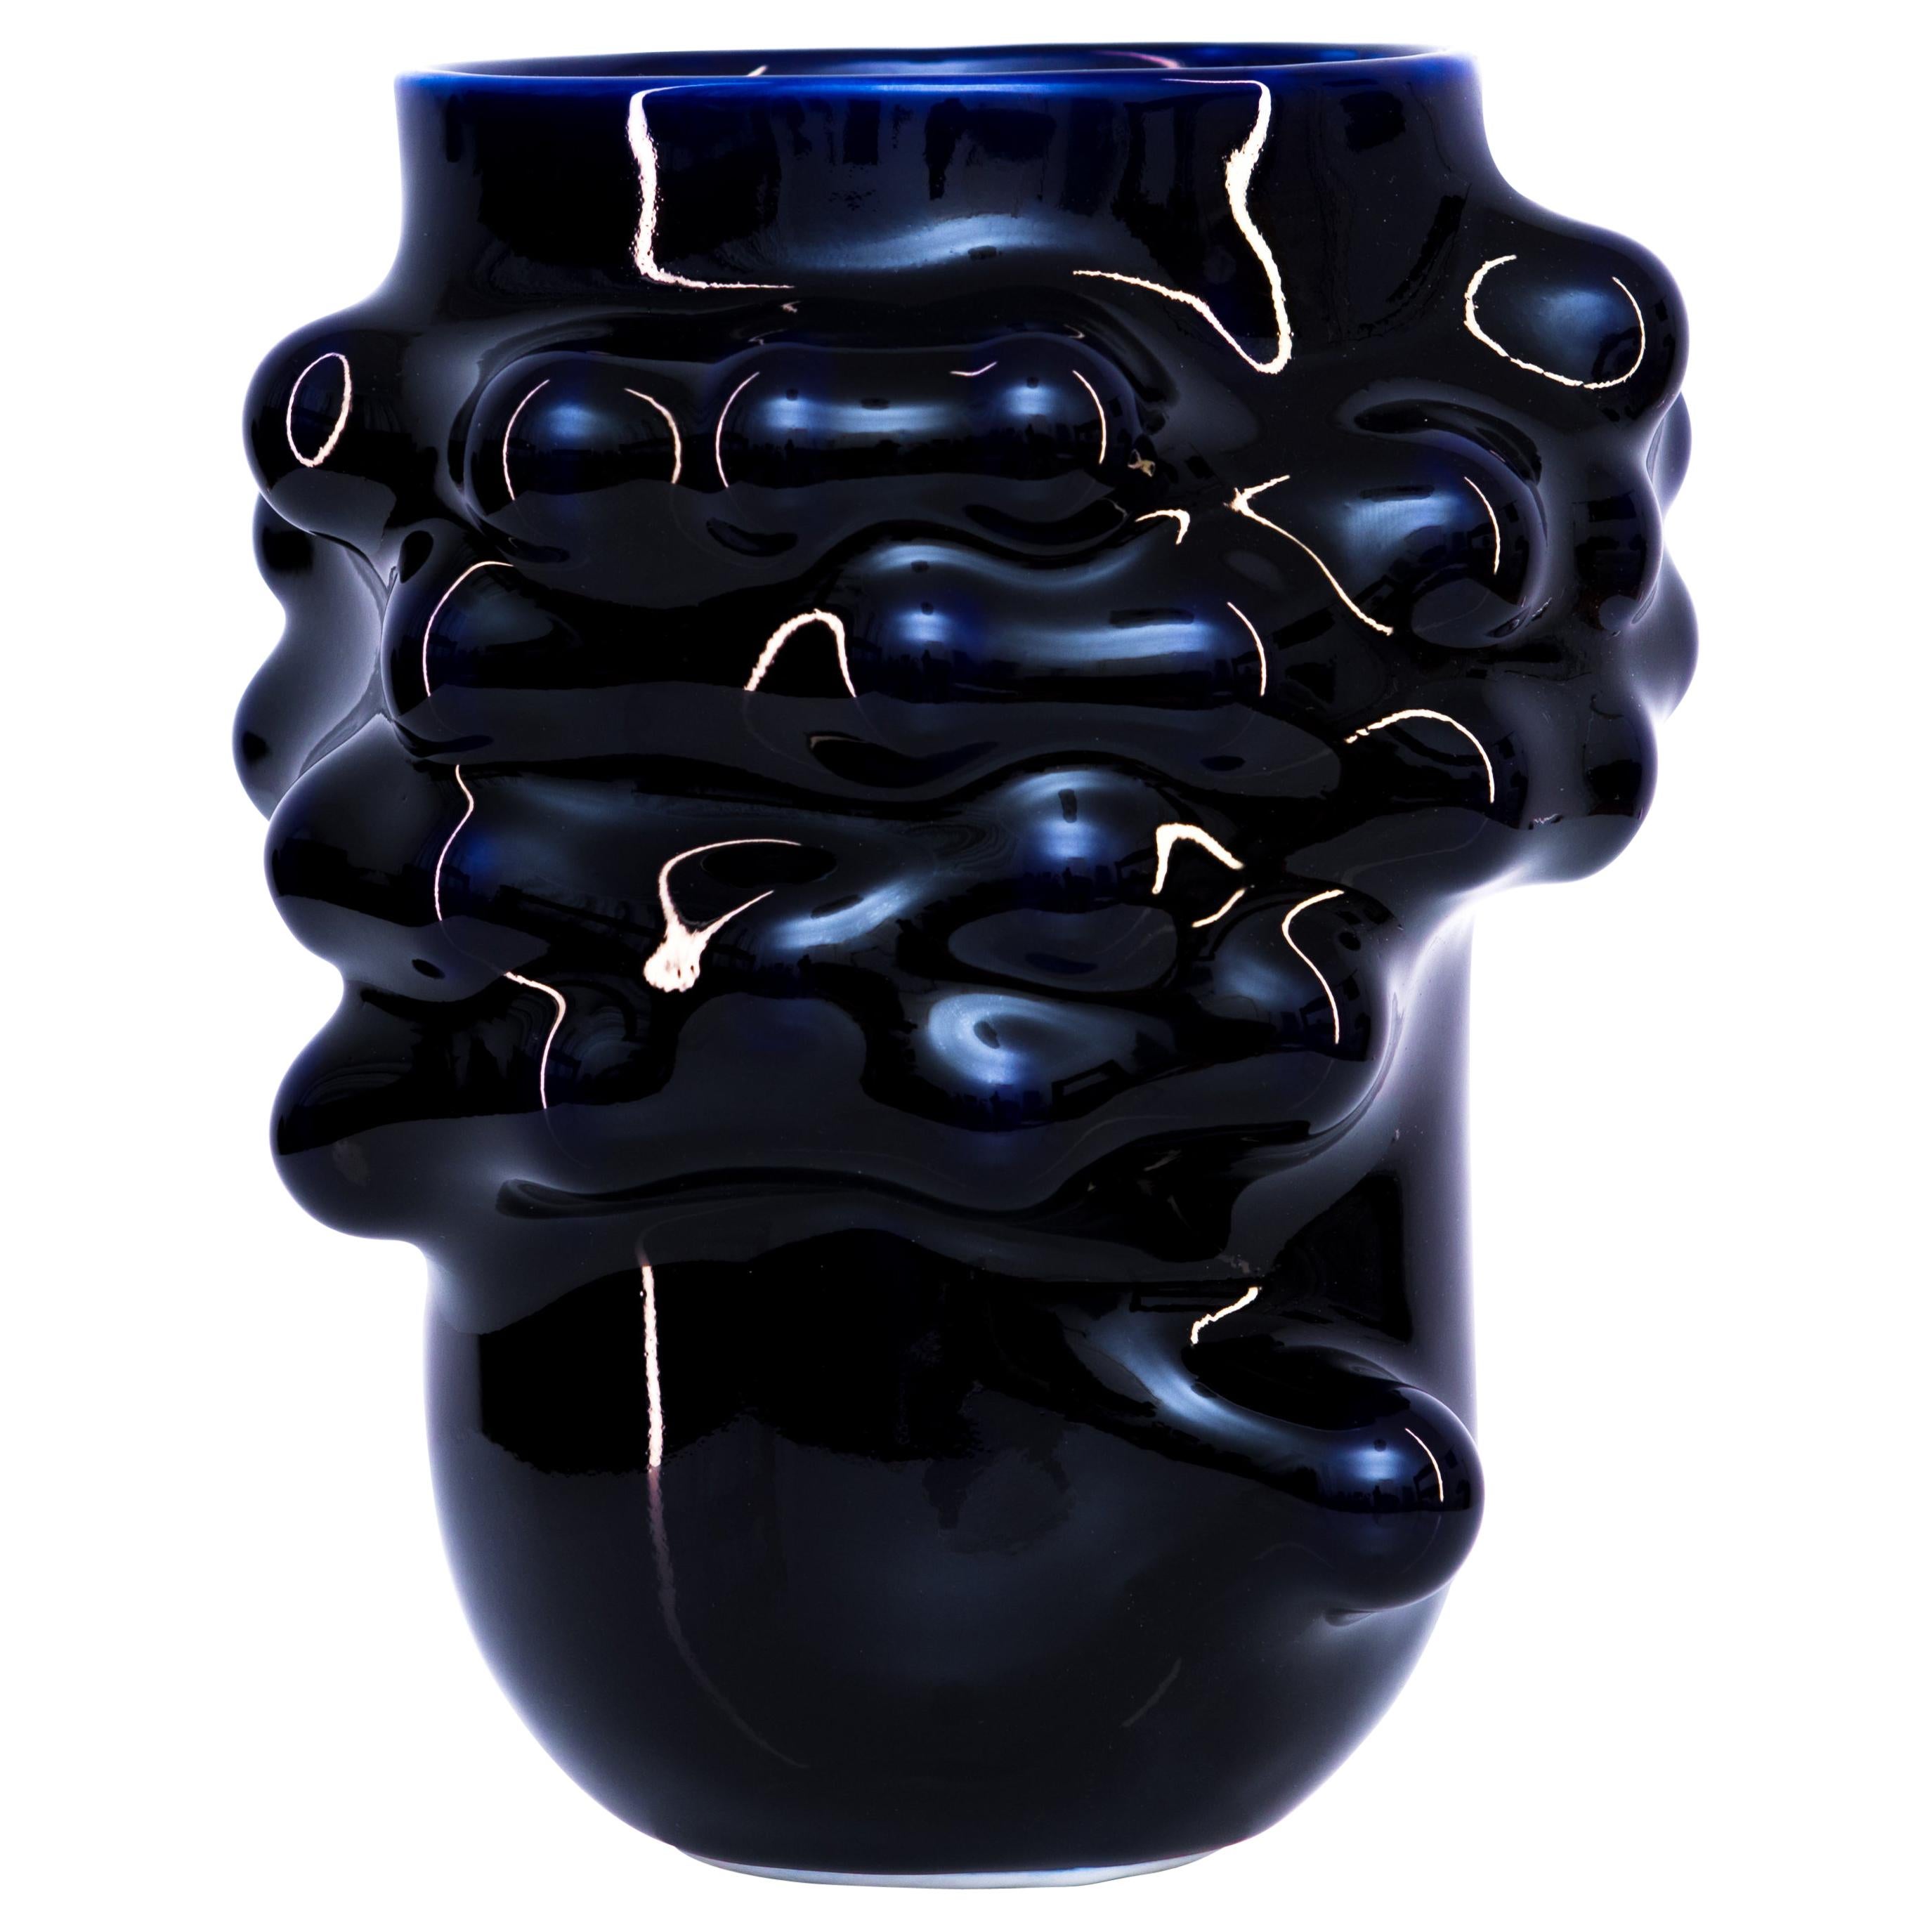 Bumps 2.0 Blue Cobalt Vase by Arkadiusz Szwed